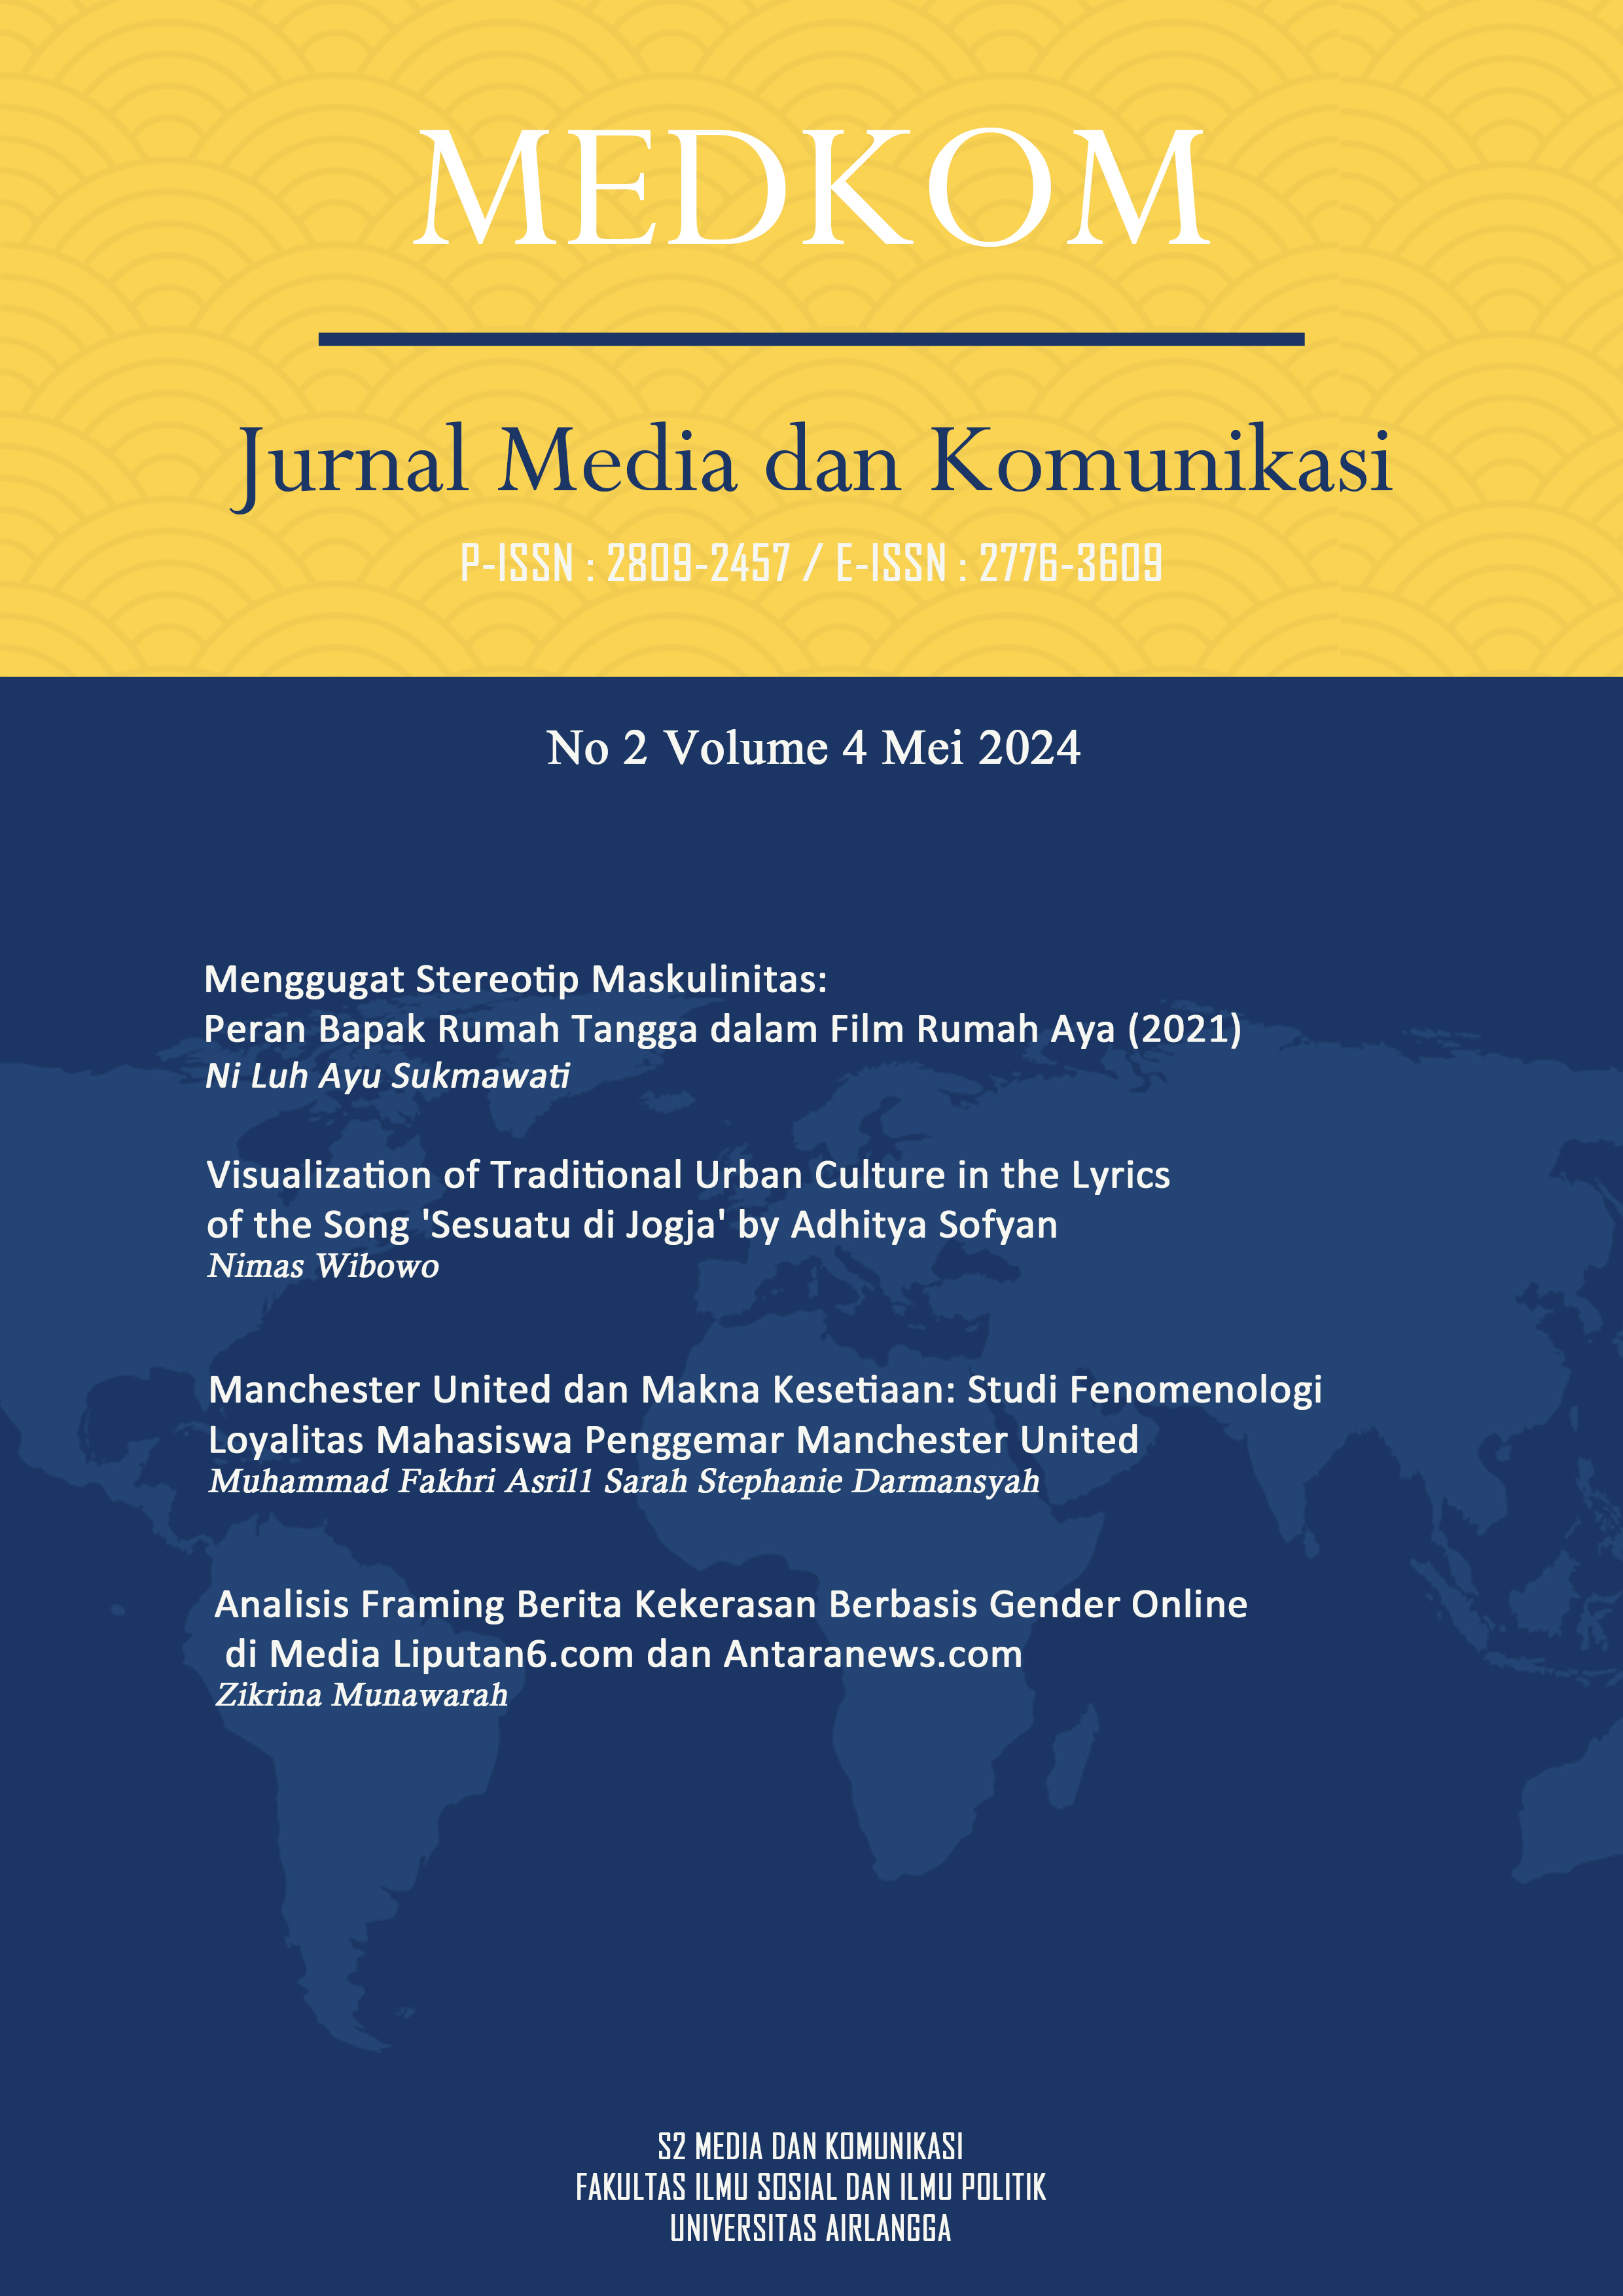 						View Vol. 4 No. 2 (2024): Jurnal Media dan Komunikasi (MEDKOM) No 2 Volume 4 2024
					